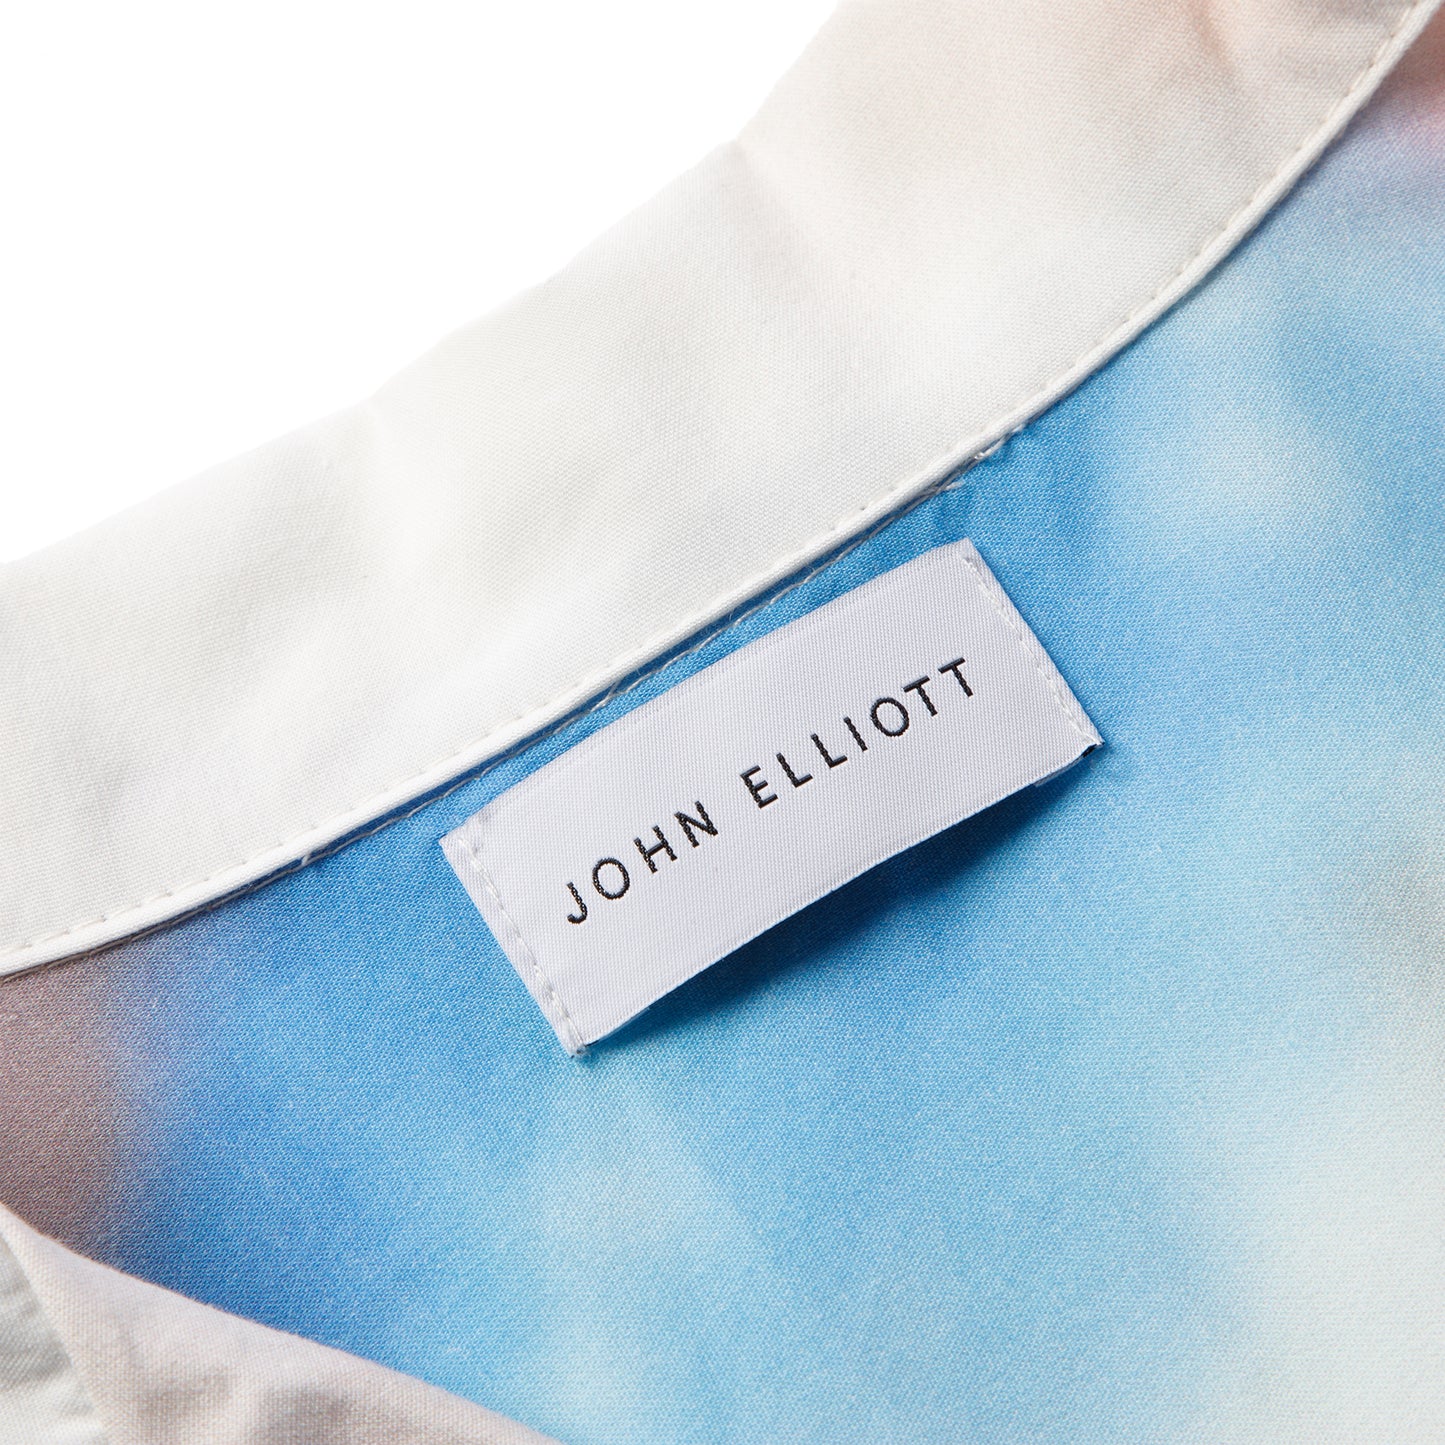 John Elliott Camp Shirt (Birds Eye)